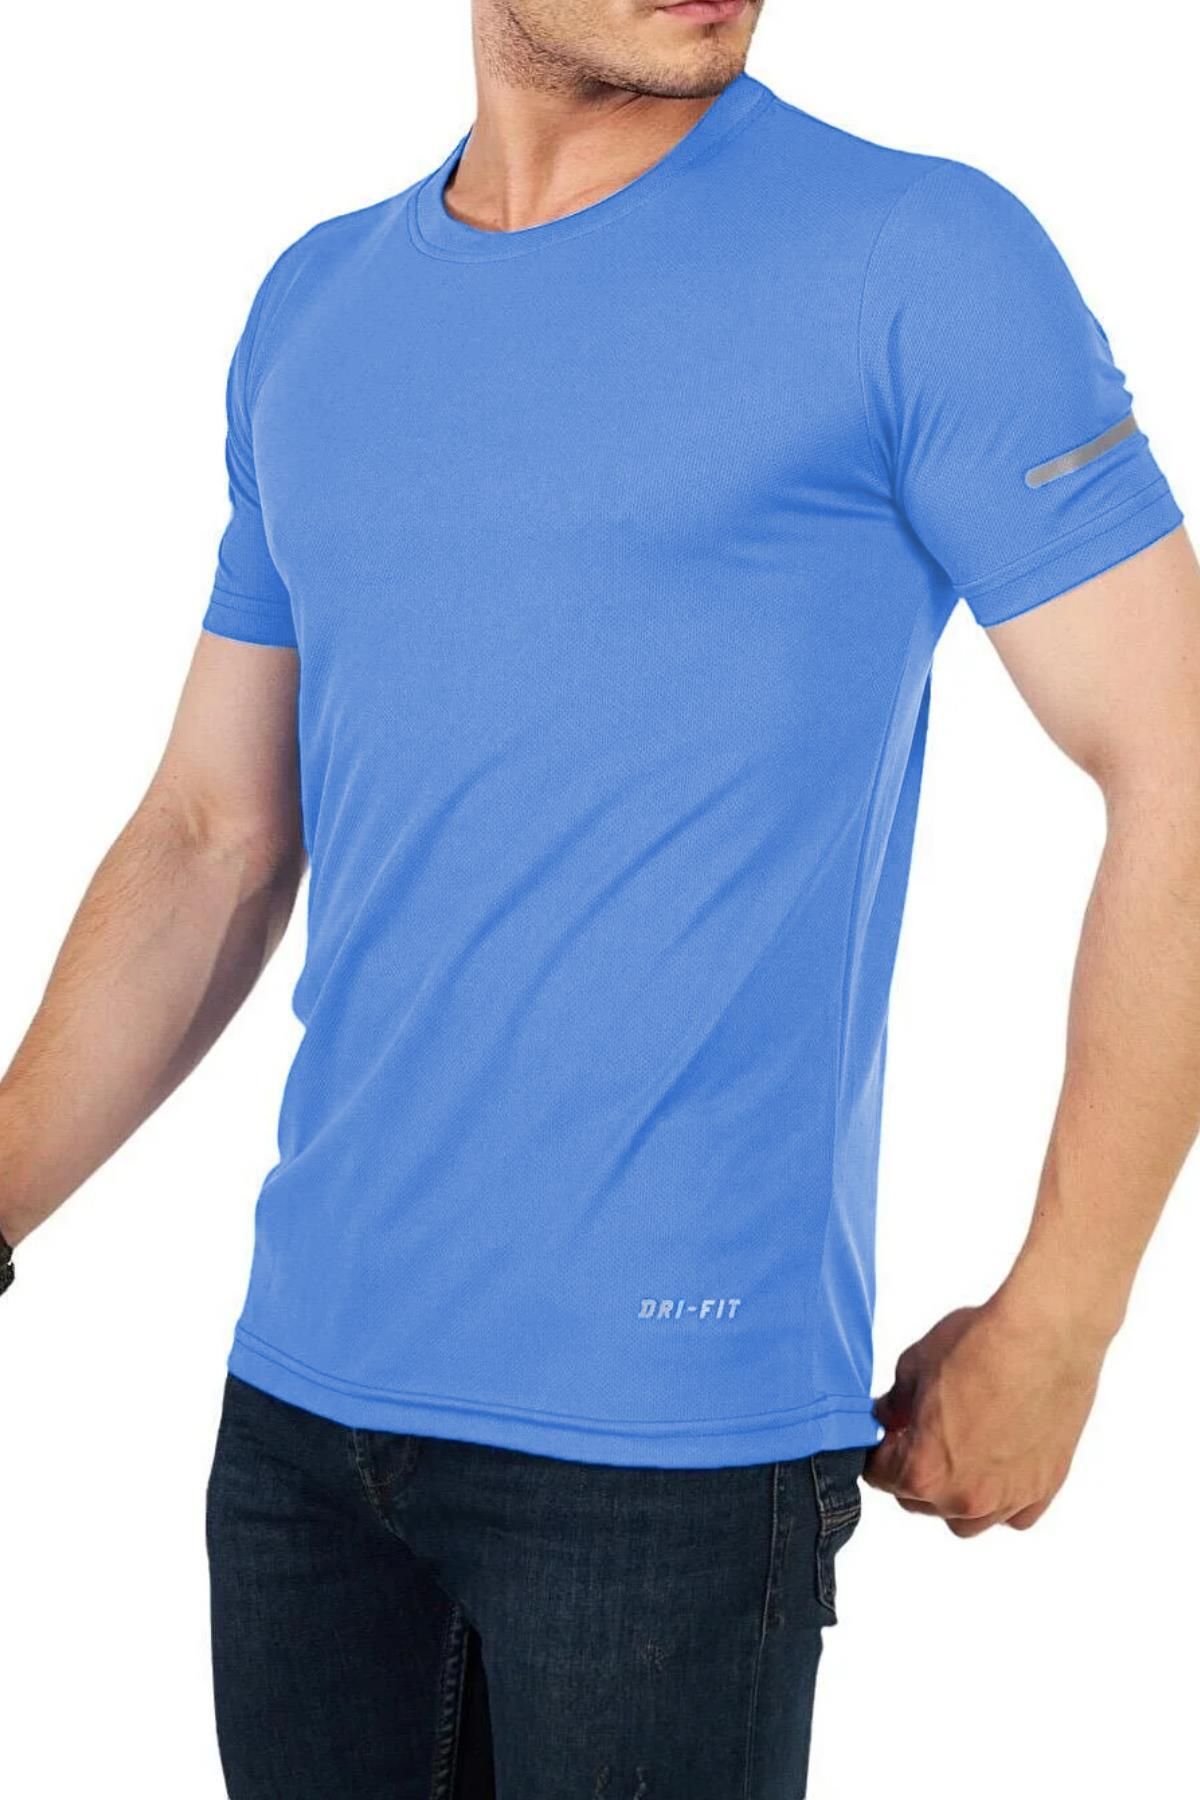 Ghassy Co Erkek Nem Emici Hızlı Kuruma Atletik Teknik Performans T-shirt